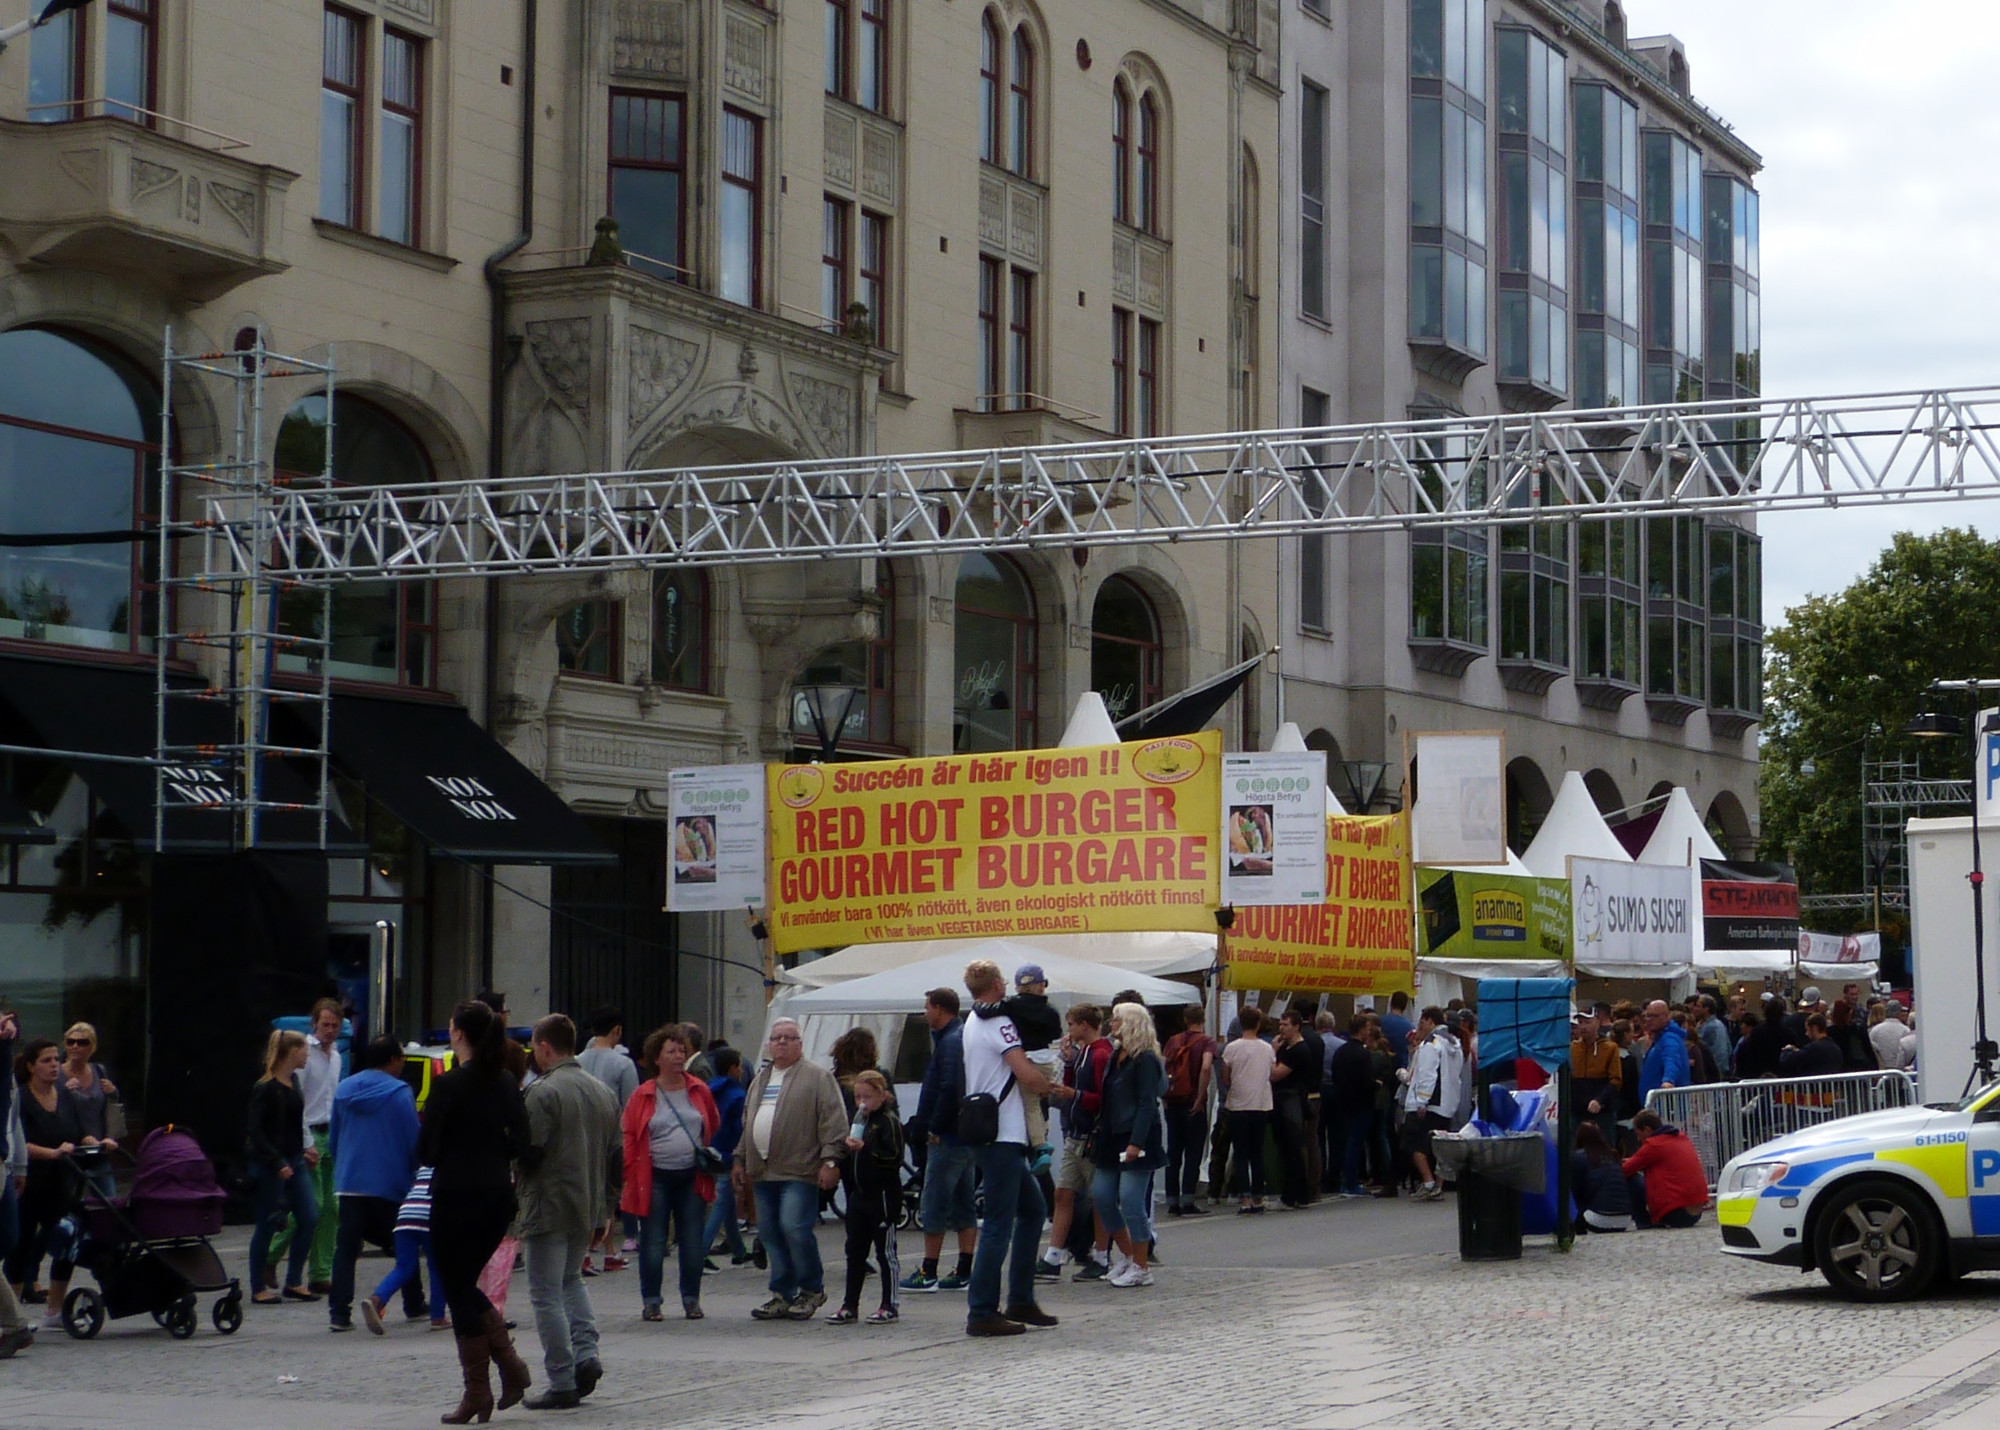 Street Market Malmo Festival